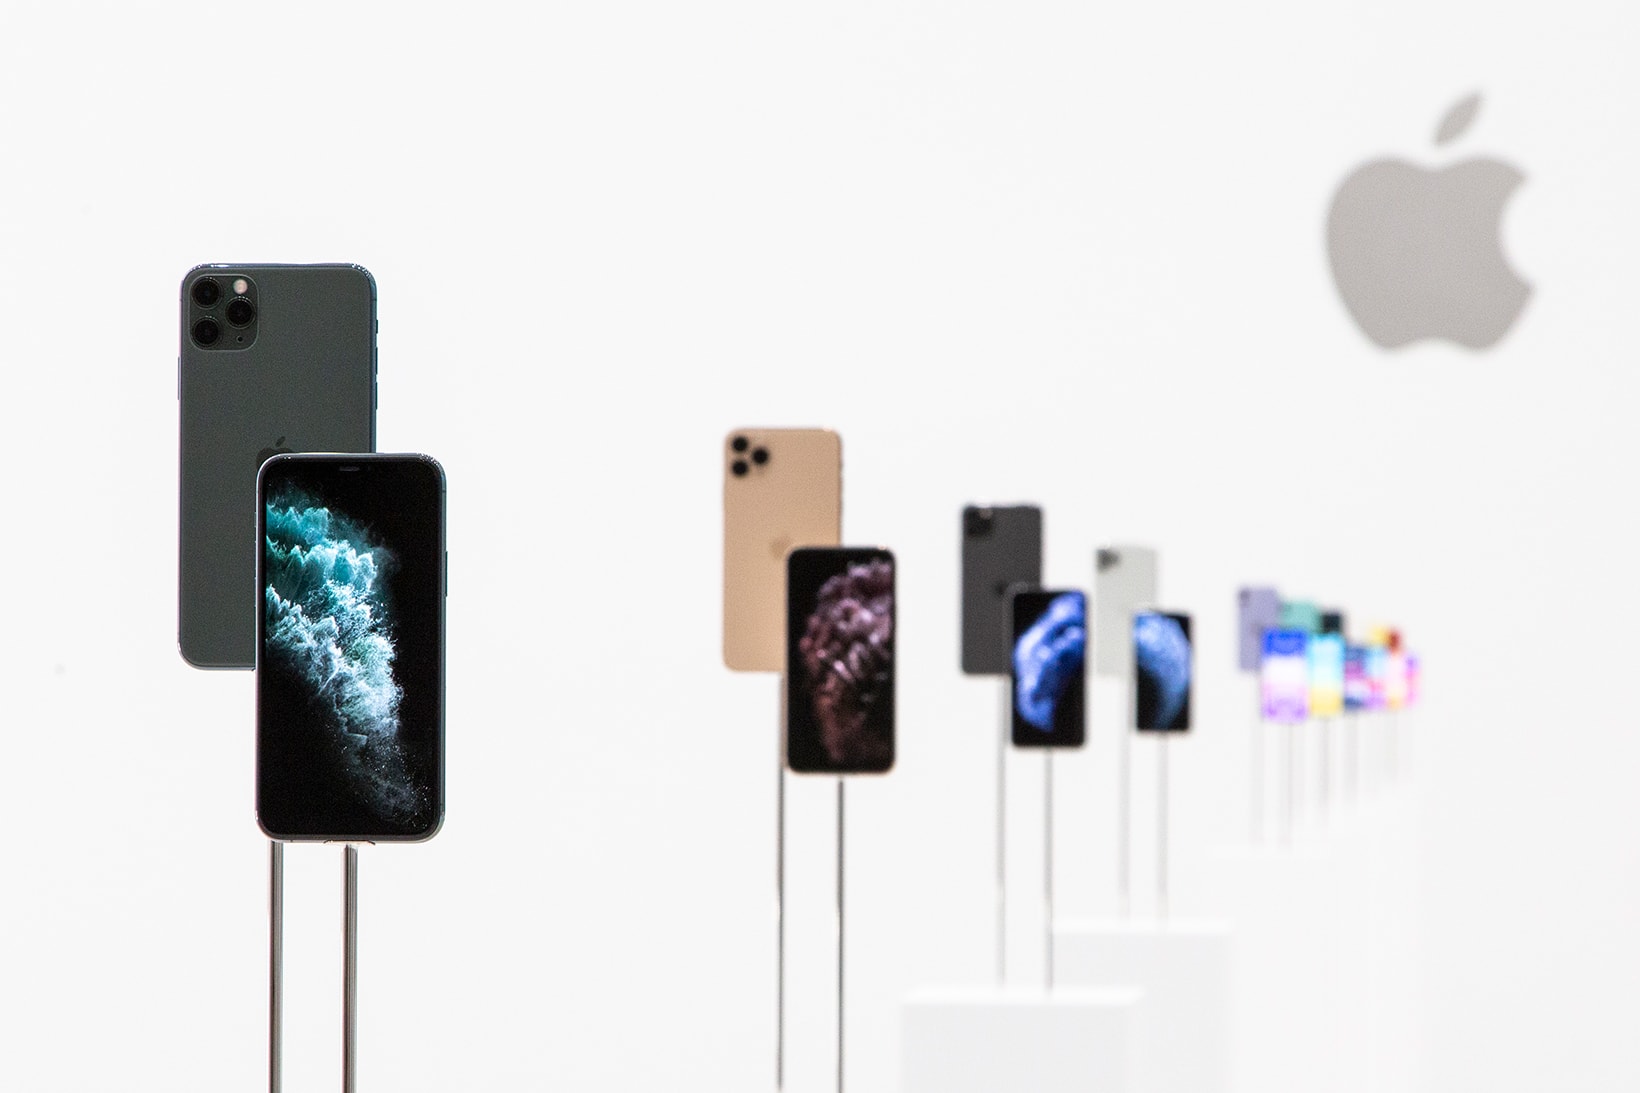 apple hardware iphone 11 pro max phones subscription model rumor tech